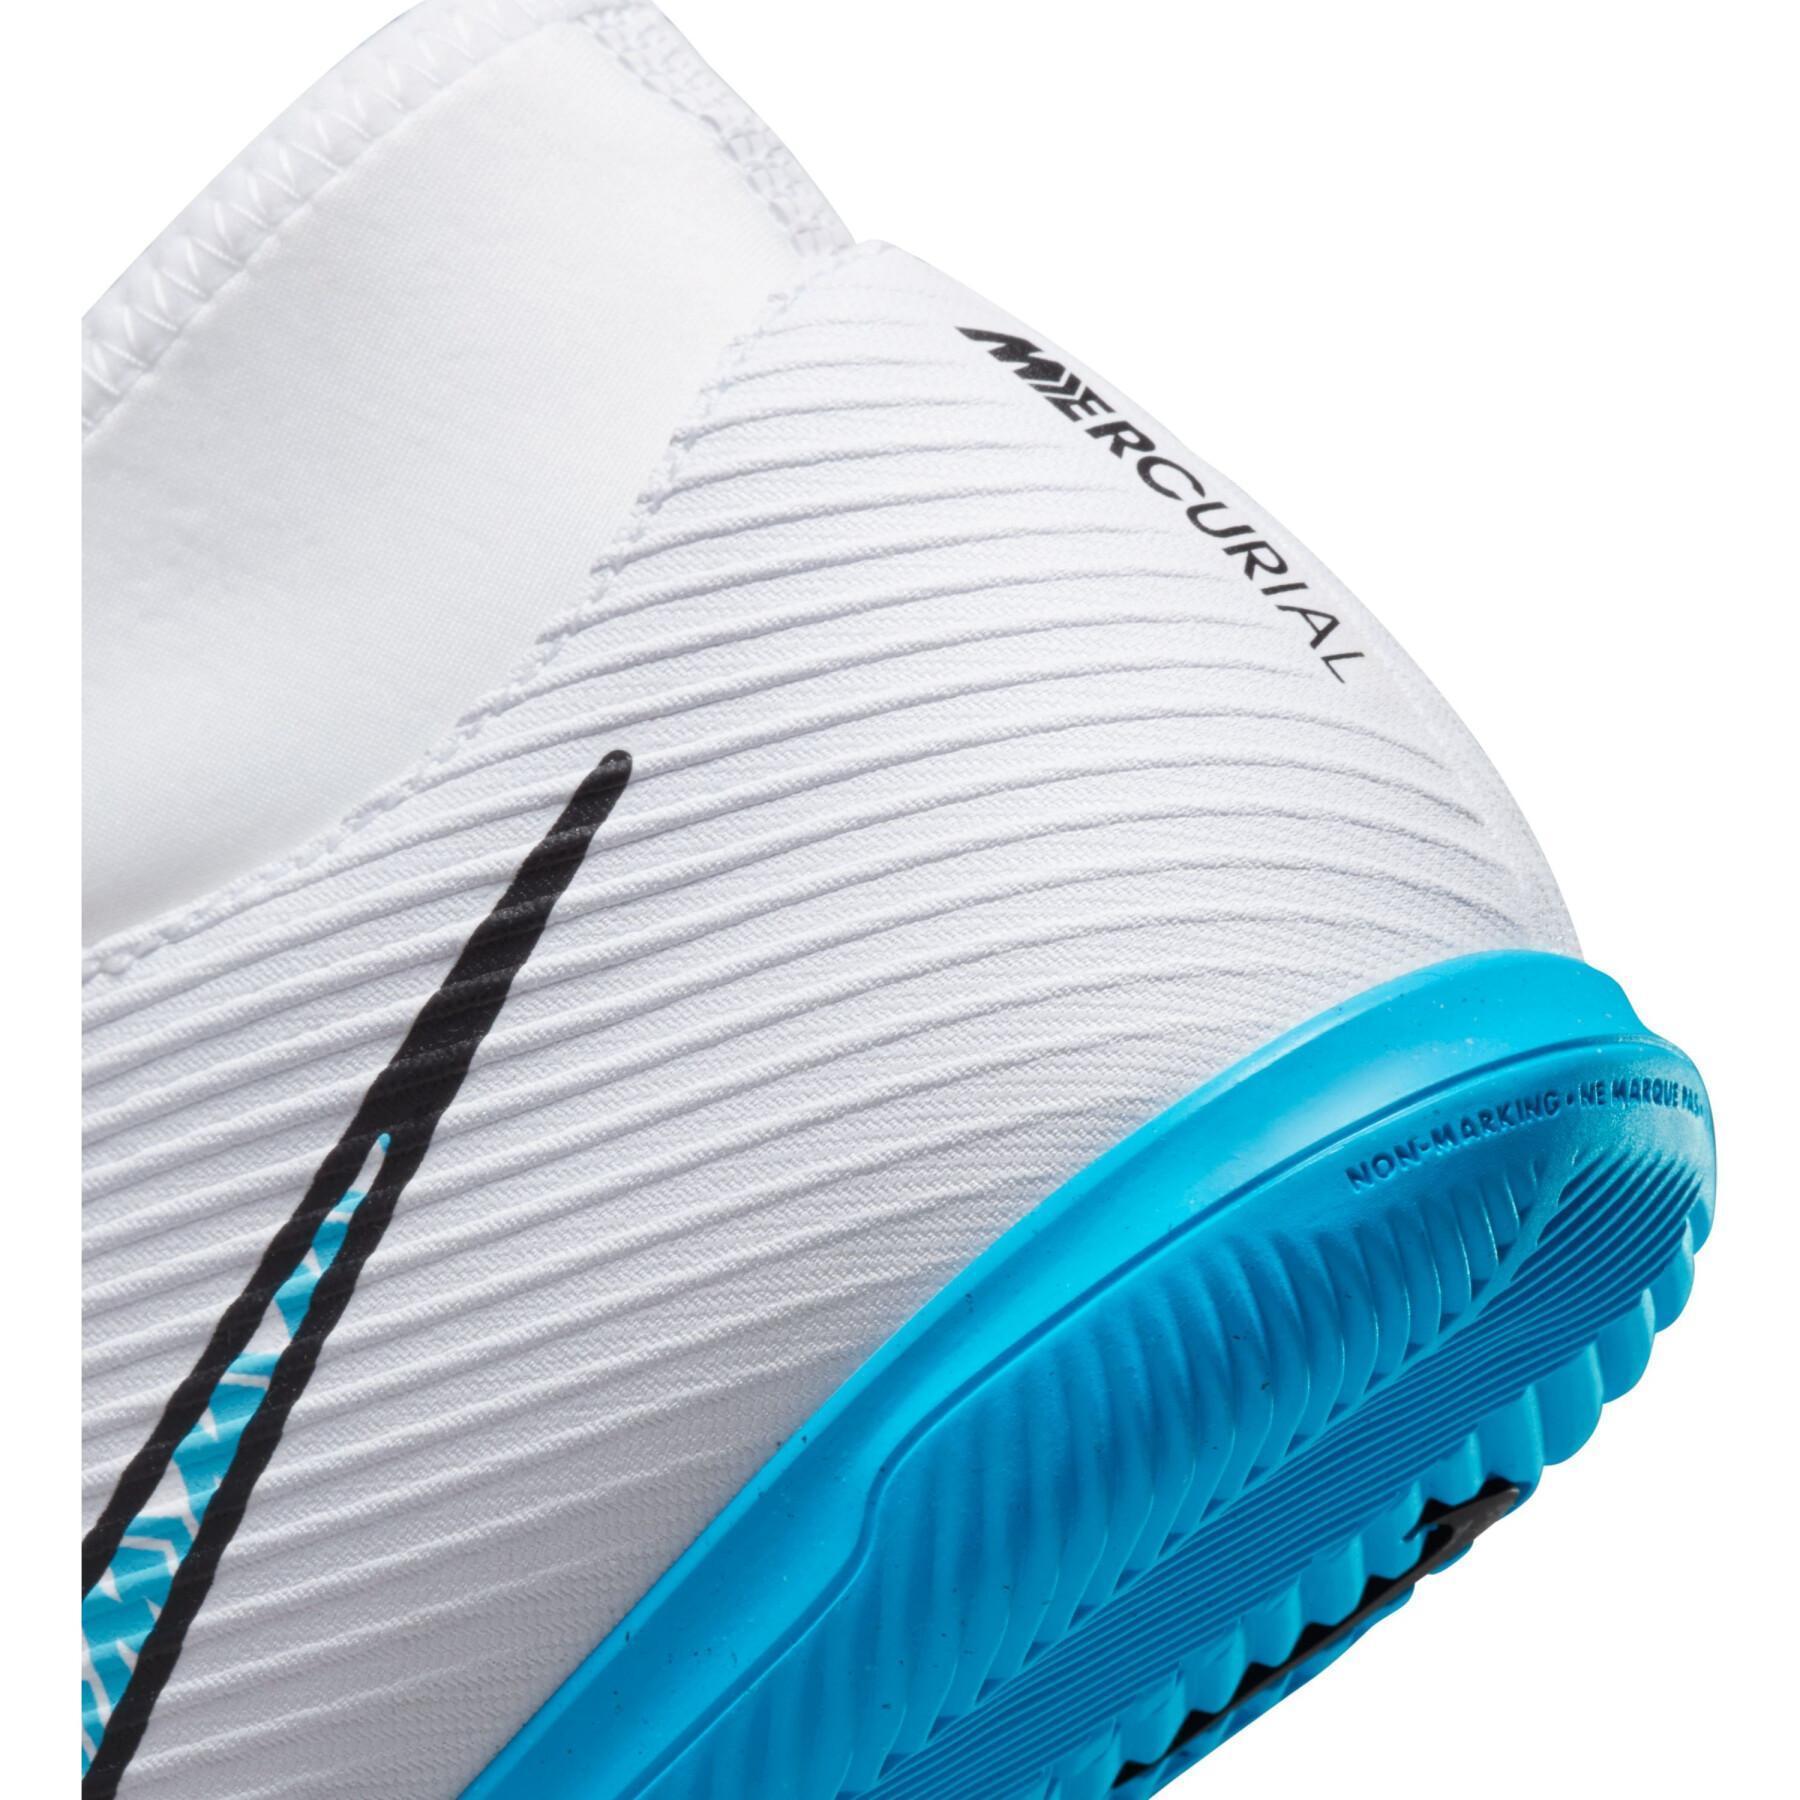 Chaussures de football Nike Mercurial Superfly 9 Club IC - Blast Pack